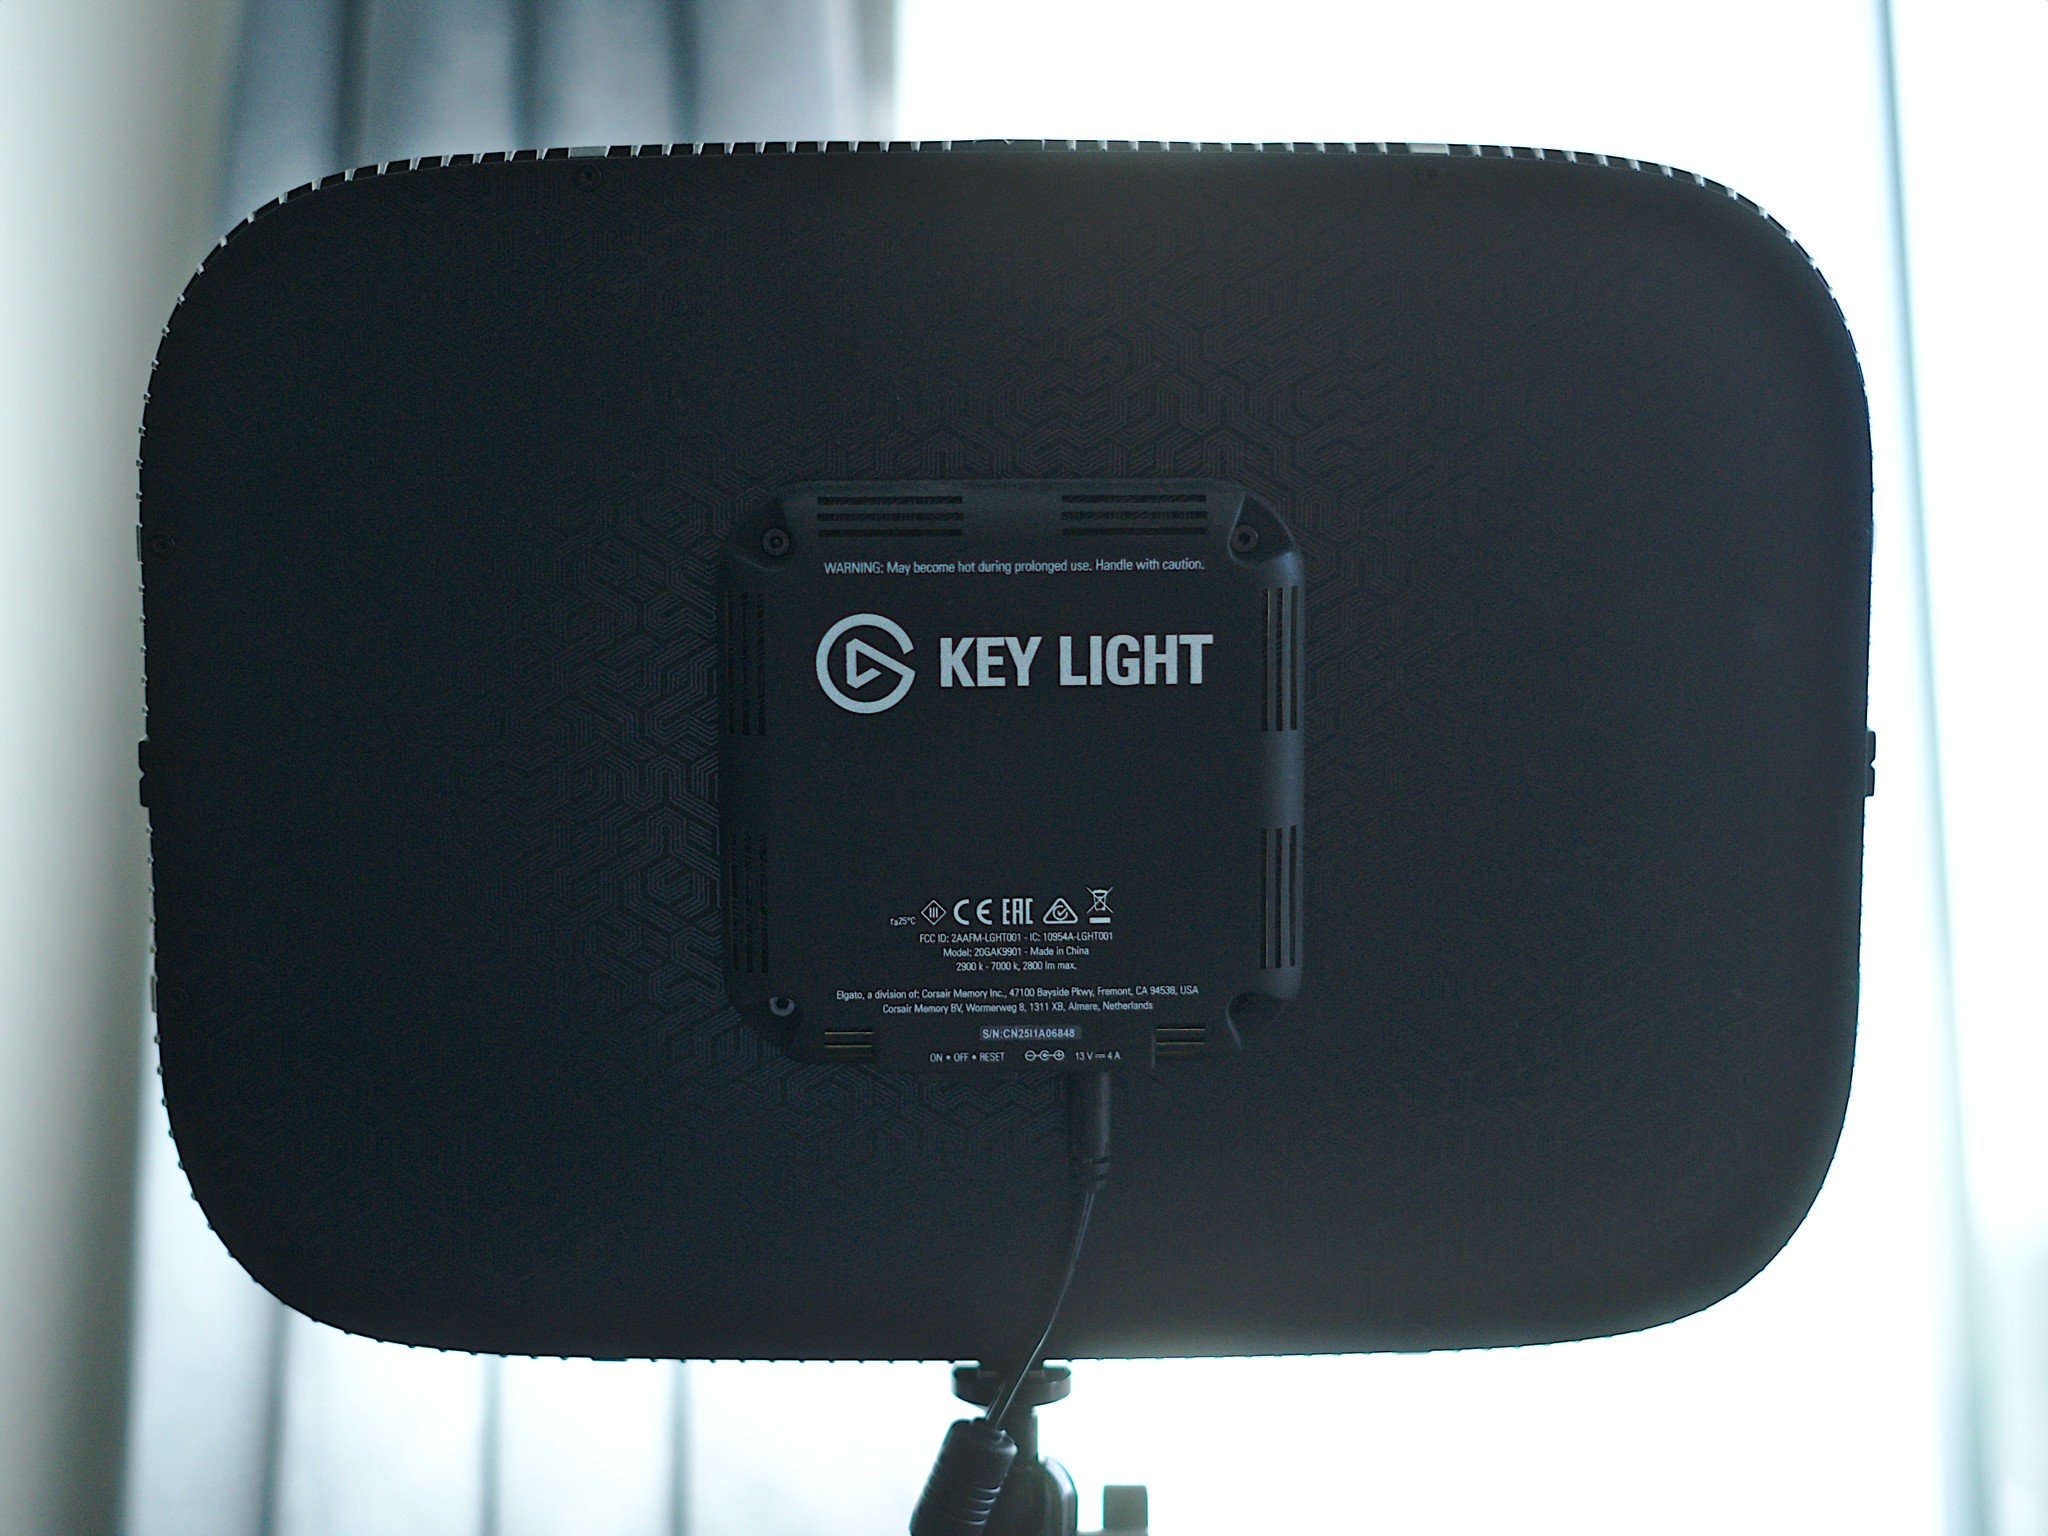 Elgato Key Light Review